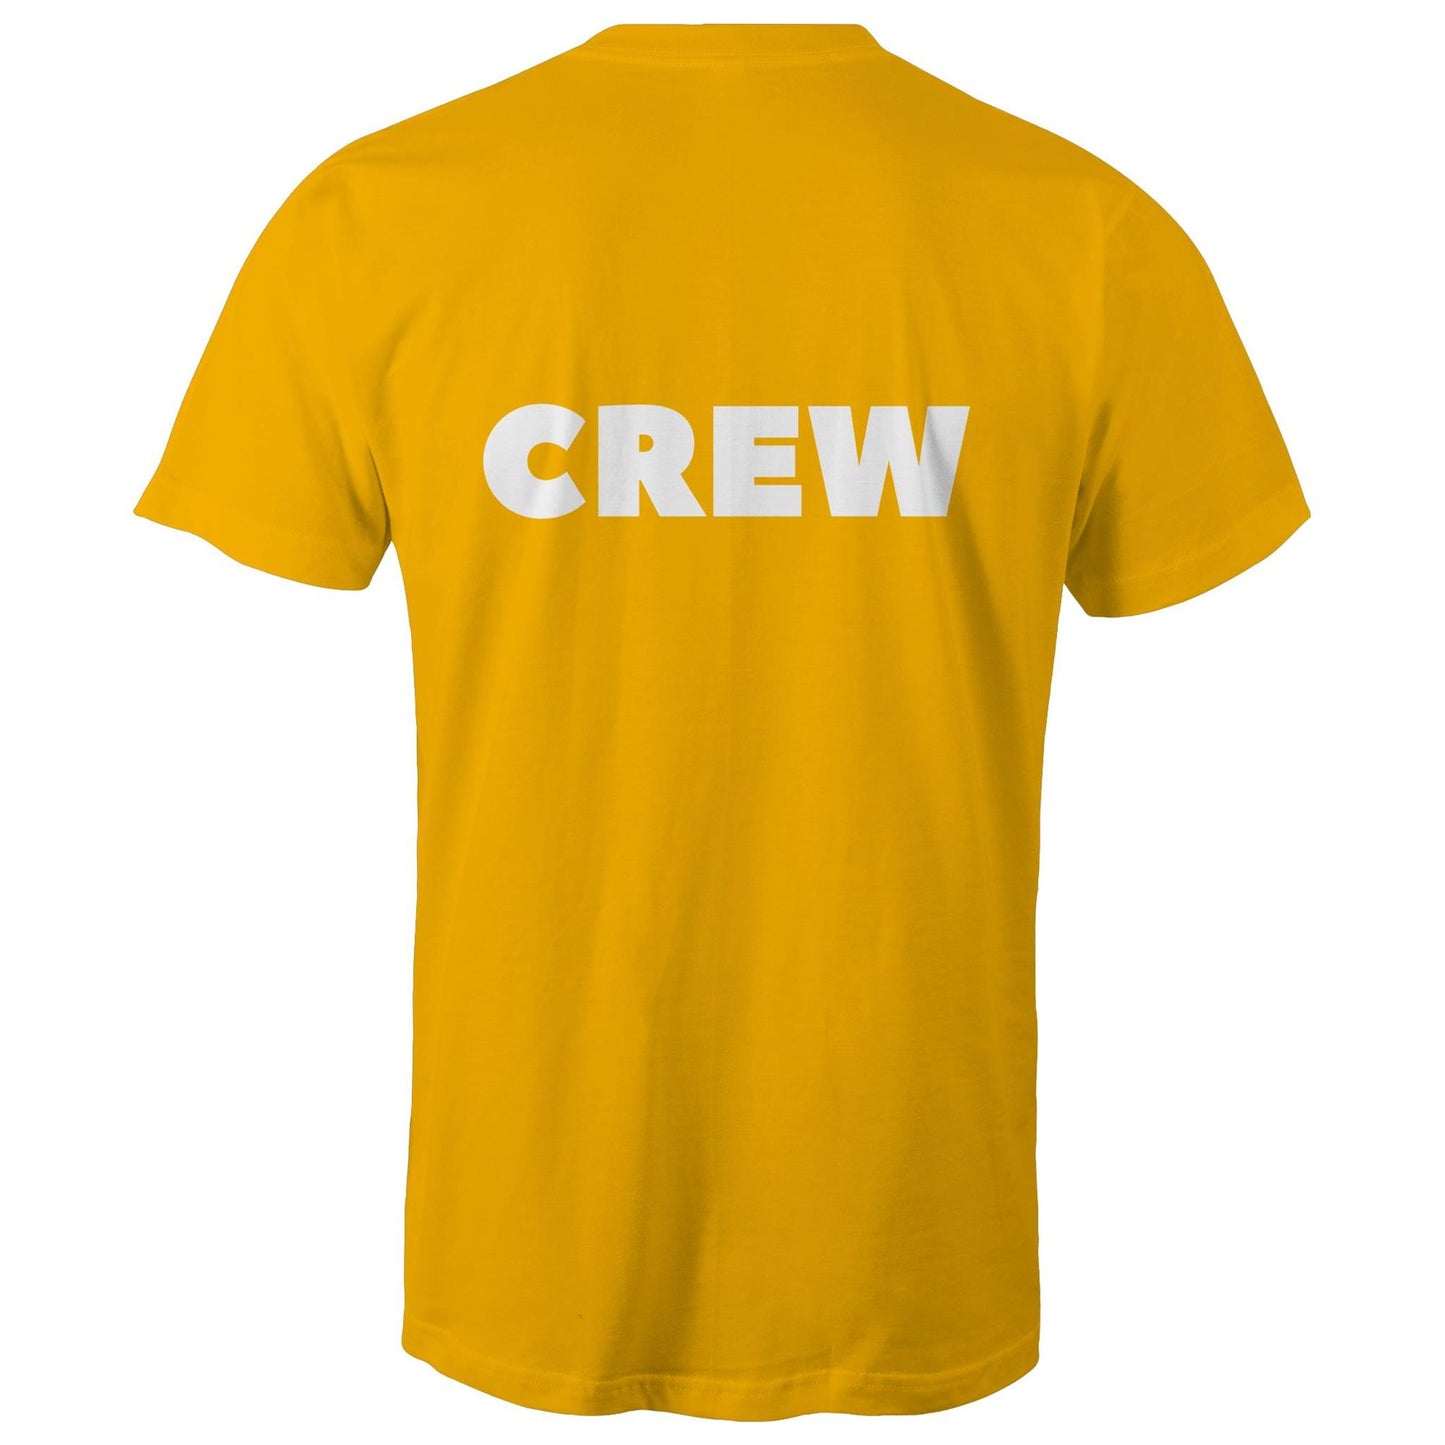 CREW - Unisex T-Shirt